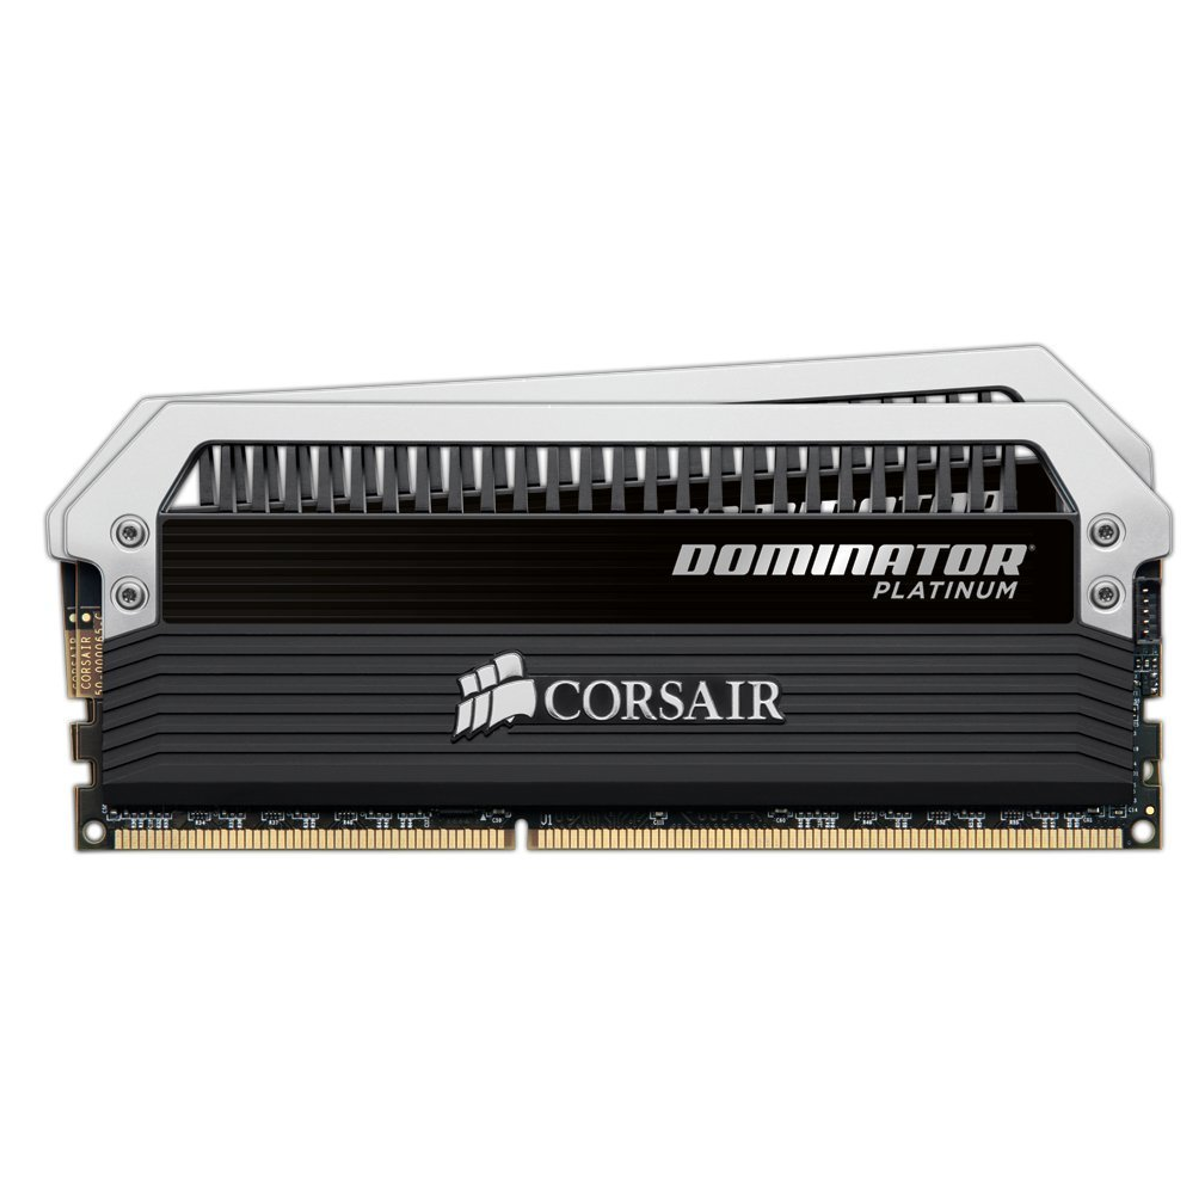 Corsair Dominator Platinum 8GB (2x4GB) DDR4 PC4-32000C19 4000MHz Dual Chann